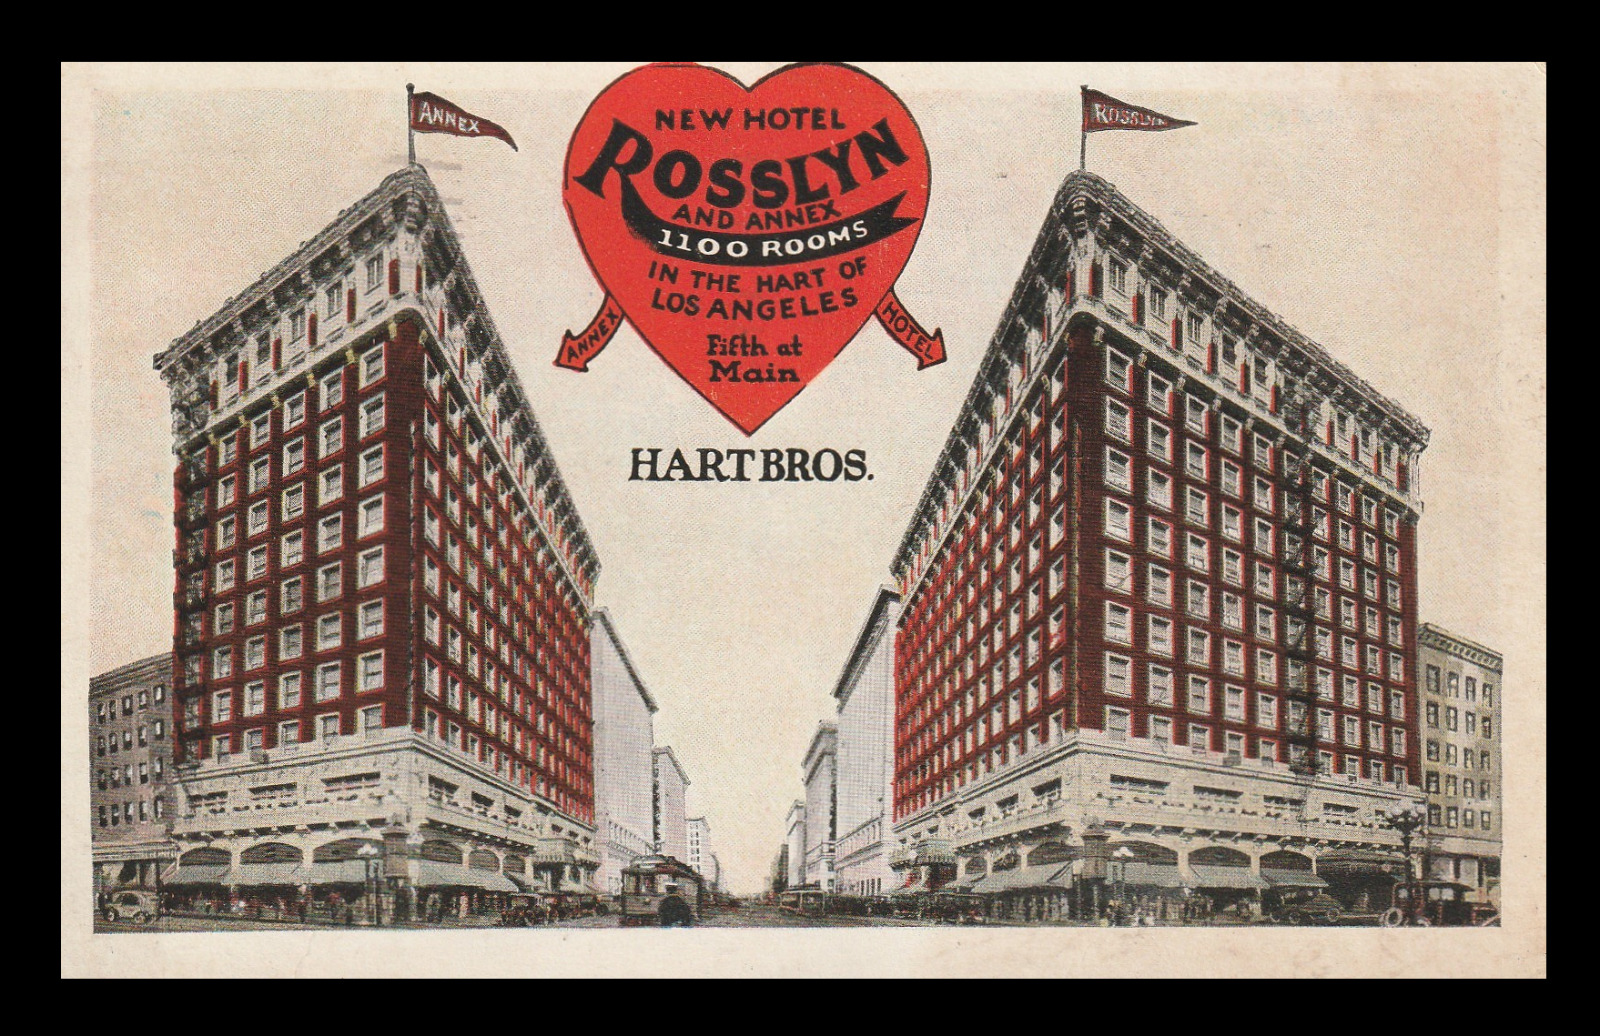 1925 Advertising Postcard Rosslyn New Hotel & Annex Los Angeles Hart Bros.